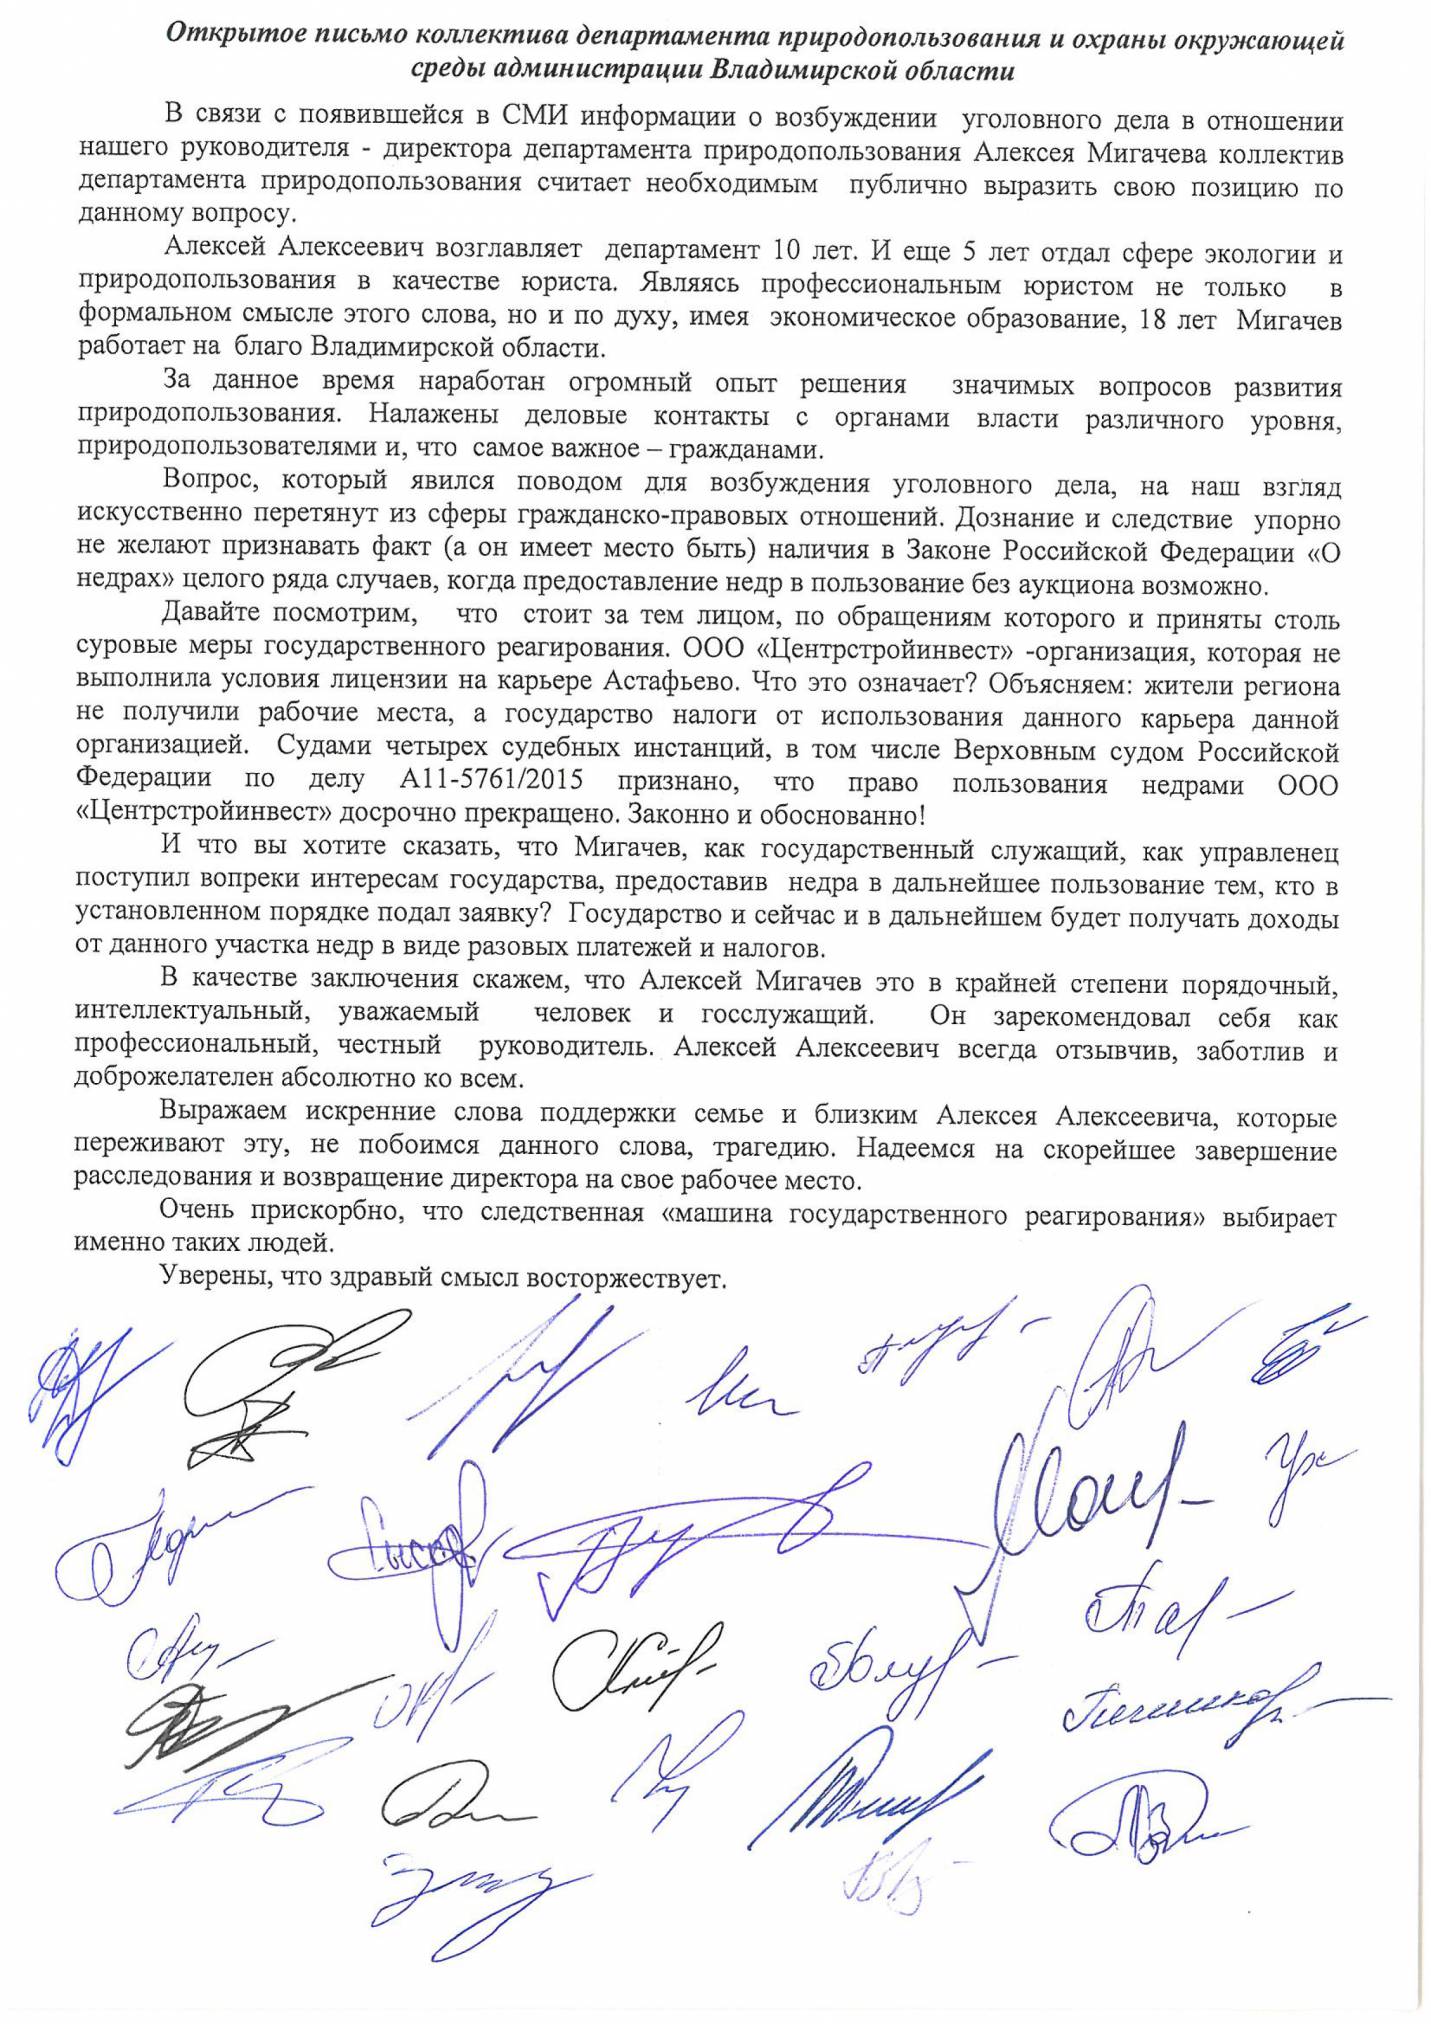 letter_Migachev_support.jpg